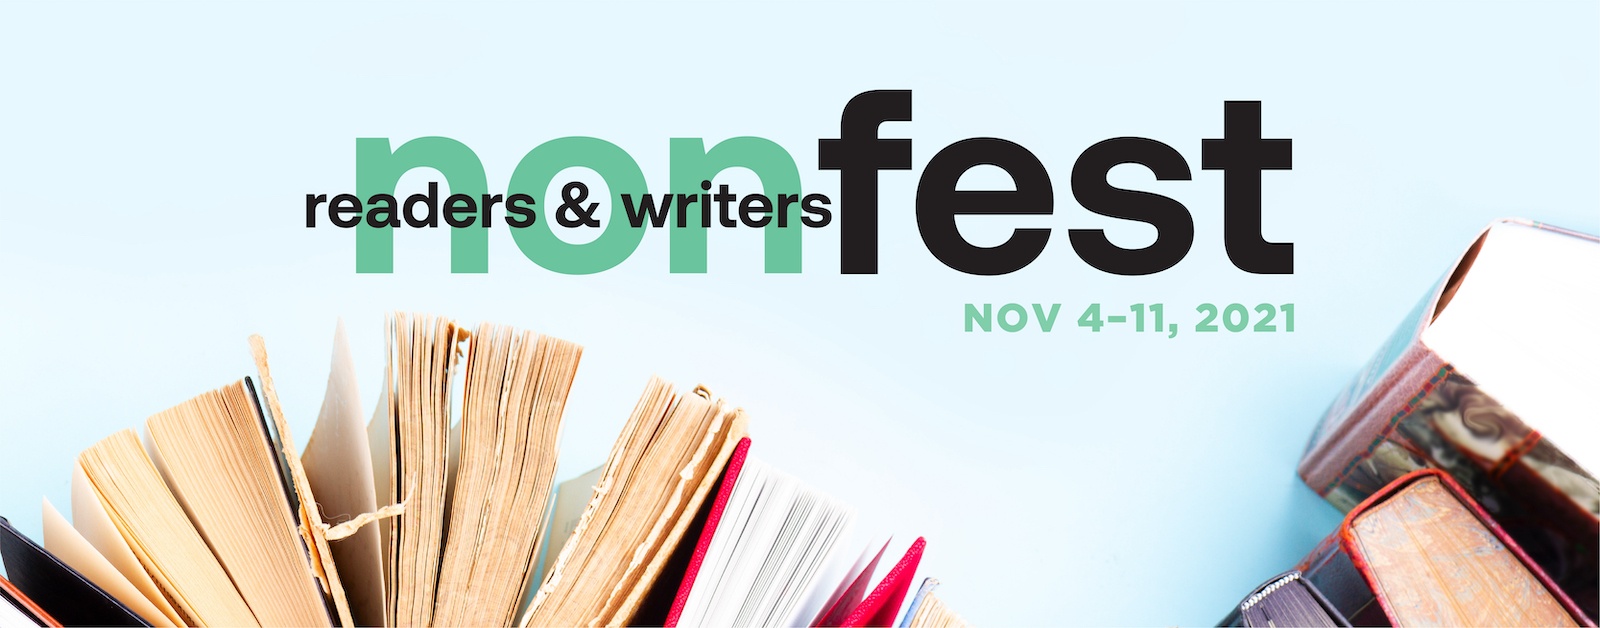 Grand Marais Art Colony North Shore Readers & Writers NonFest, November 4 – 11, 2021